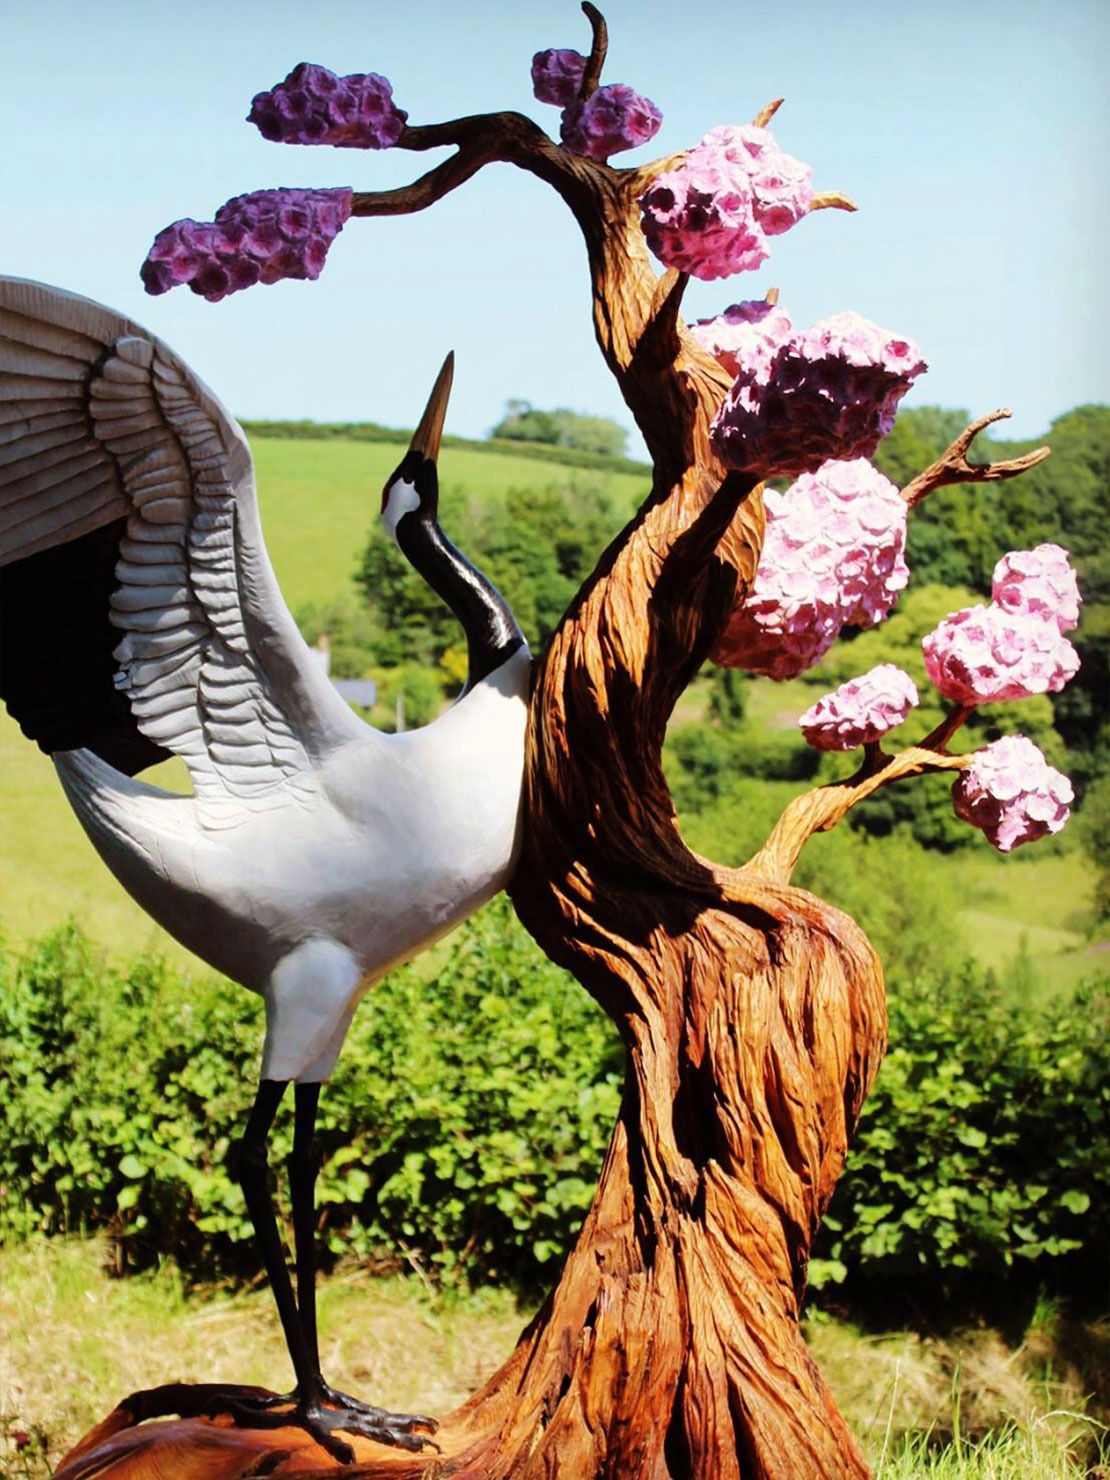 Painted wooden sculpture of a crane